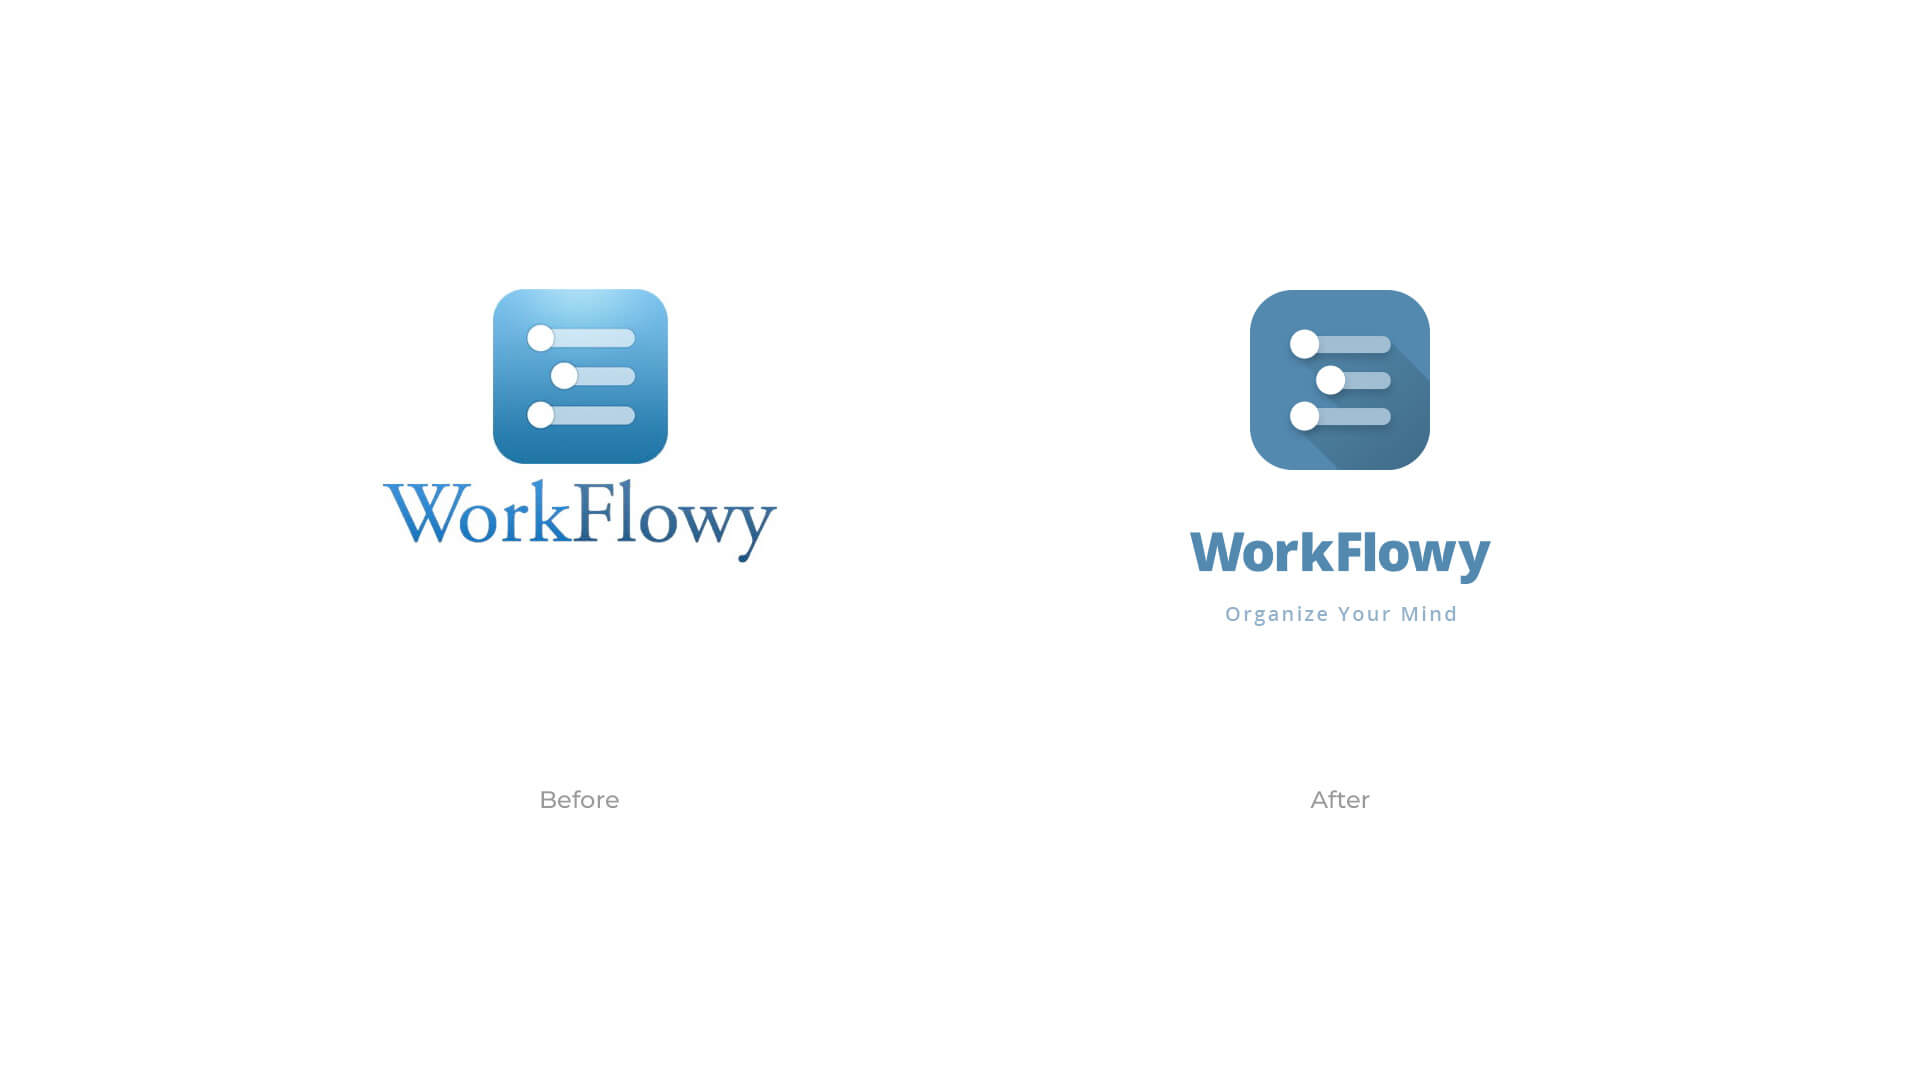 WorkFlowy-logo-comparison